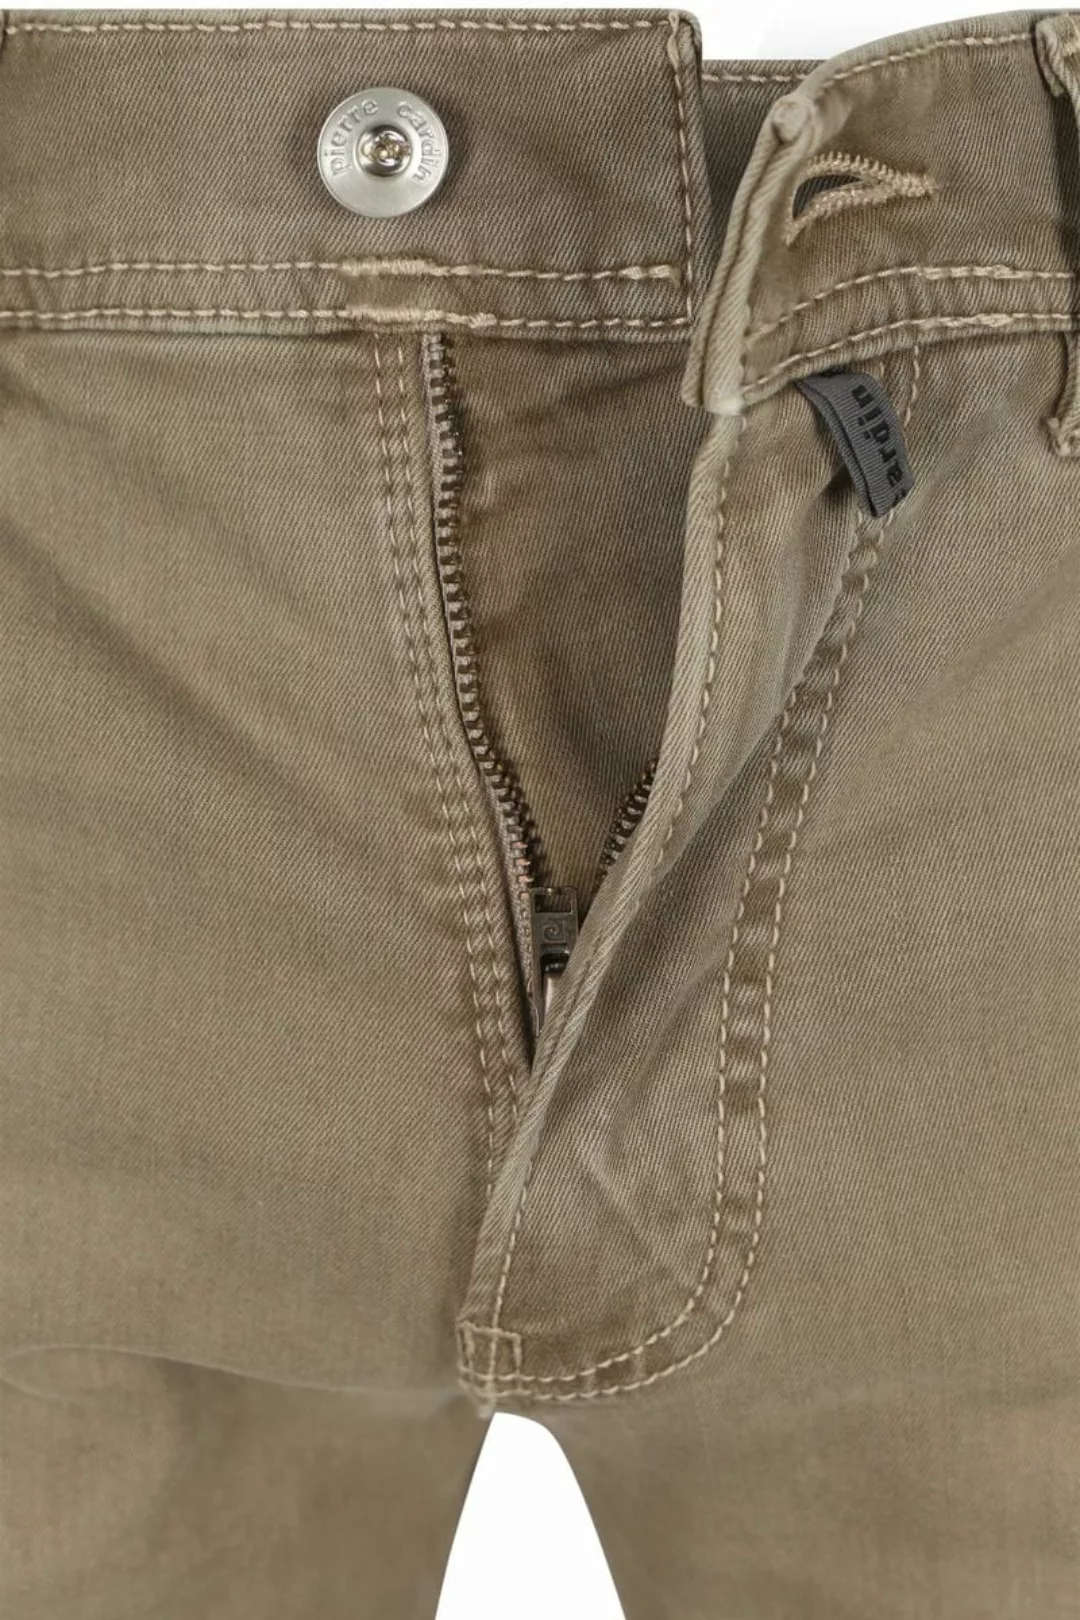 Pierre Cardin Trousers Lyon  Future Flex Beige - Größe W 38 - L 32 günstig online kaufen